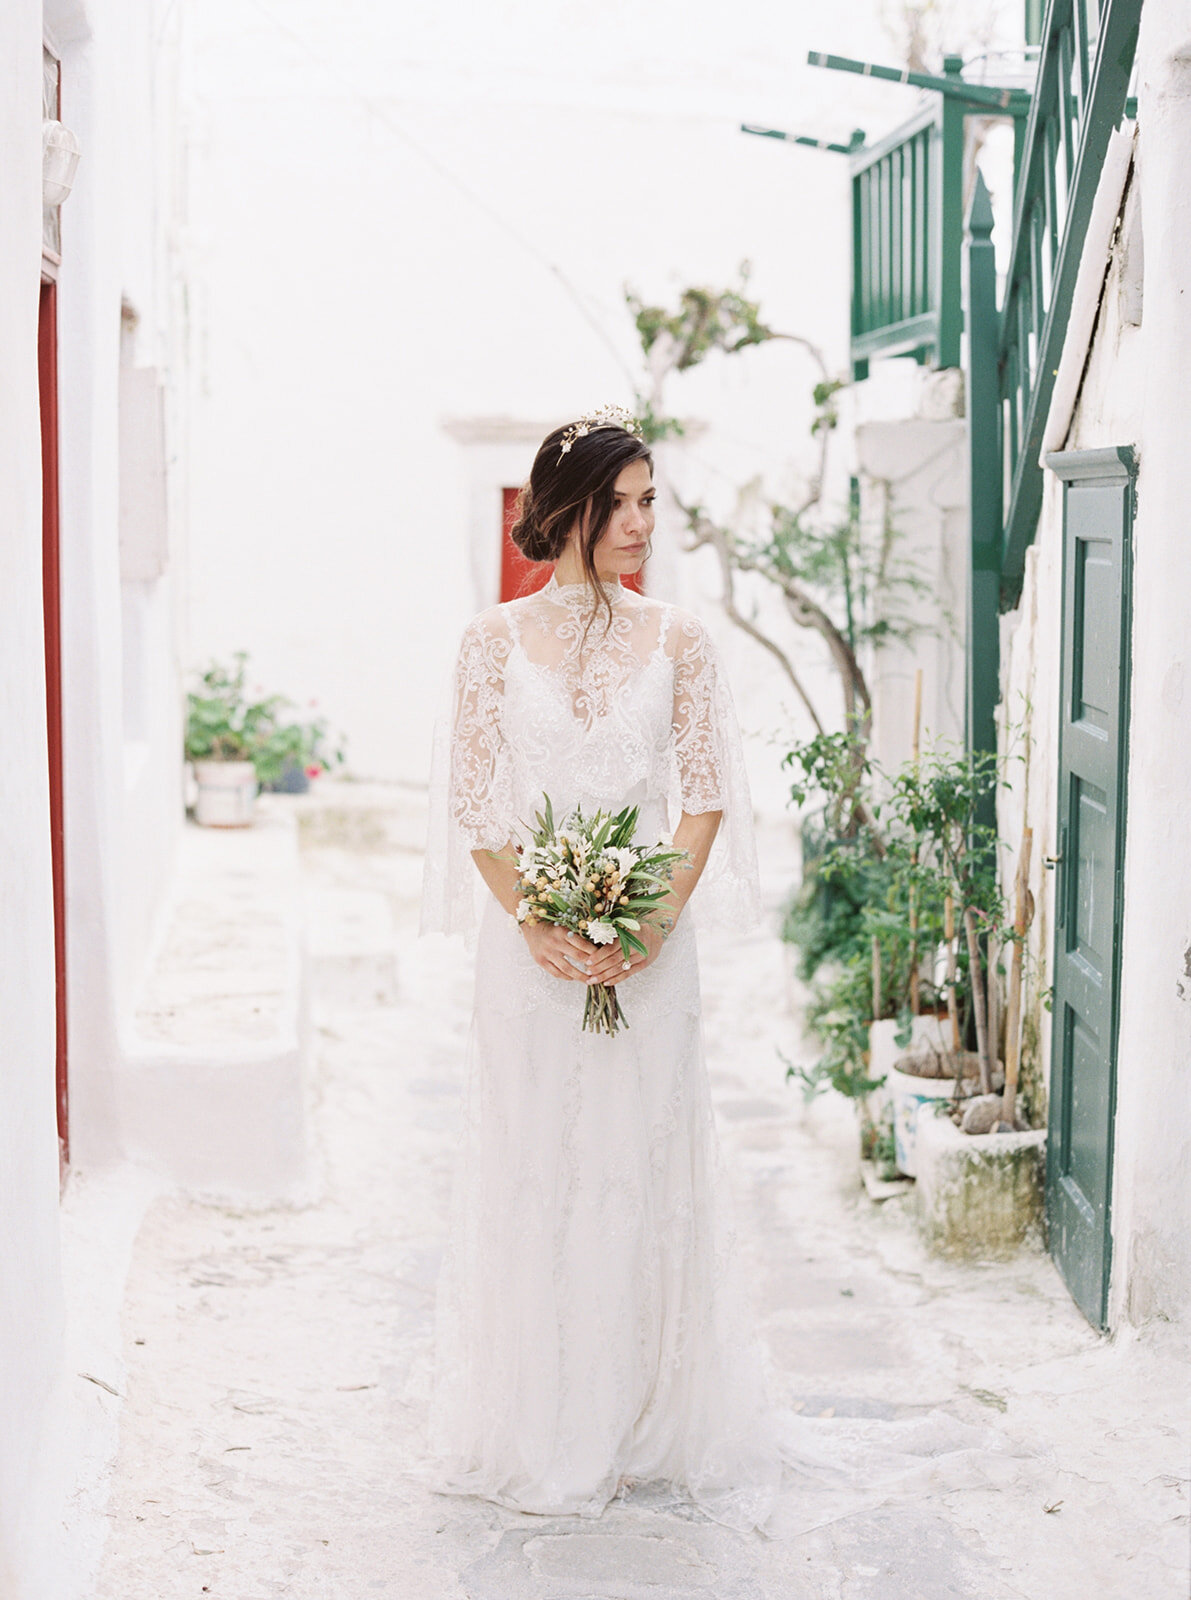 Jaclyn-Journey-Weddings-Church-Sea-Mykonos-Greece-Wedding 7.jpg